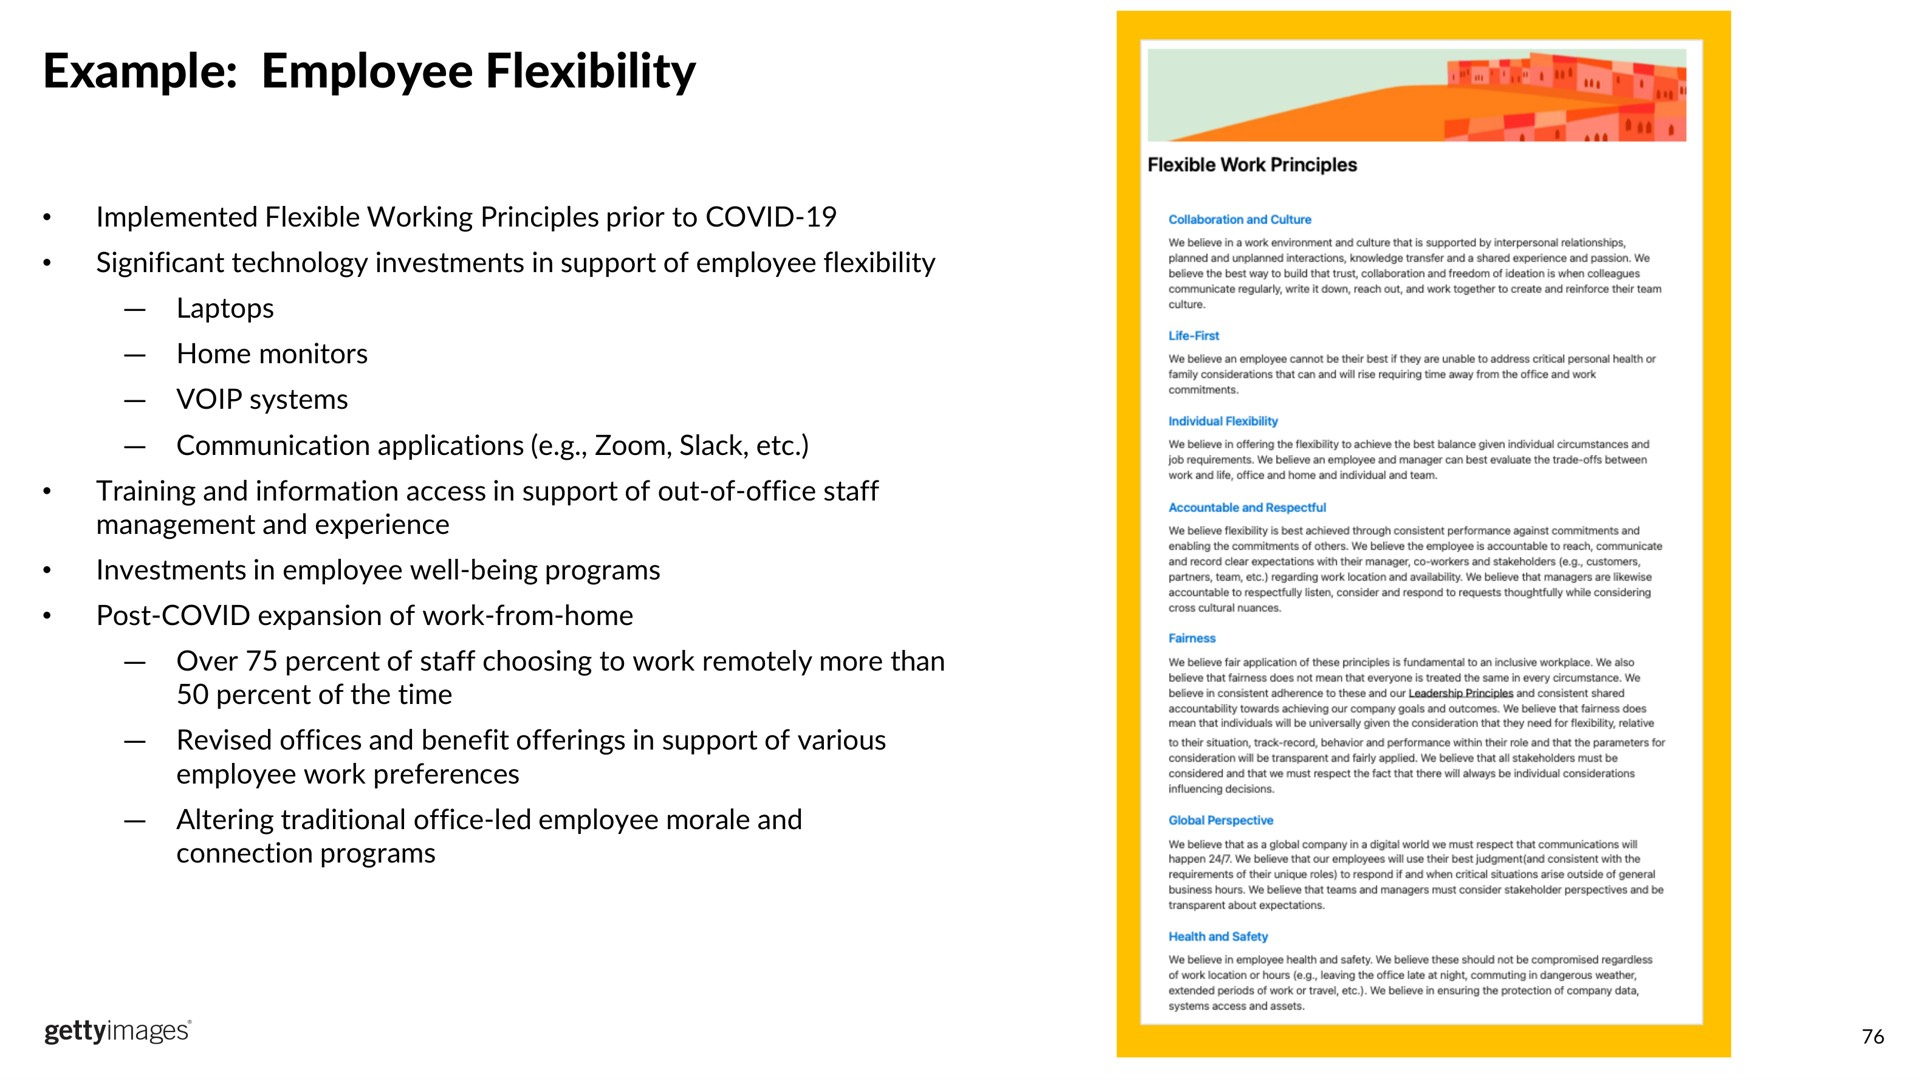 example employee flexibility | Getty